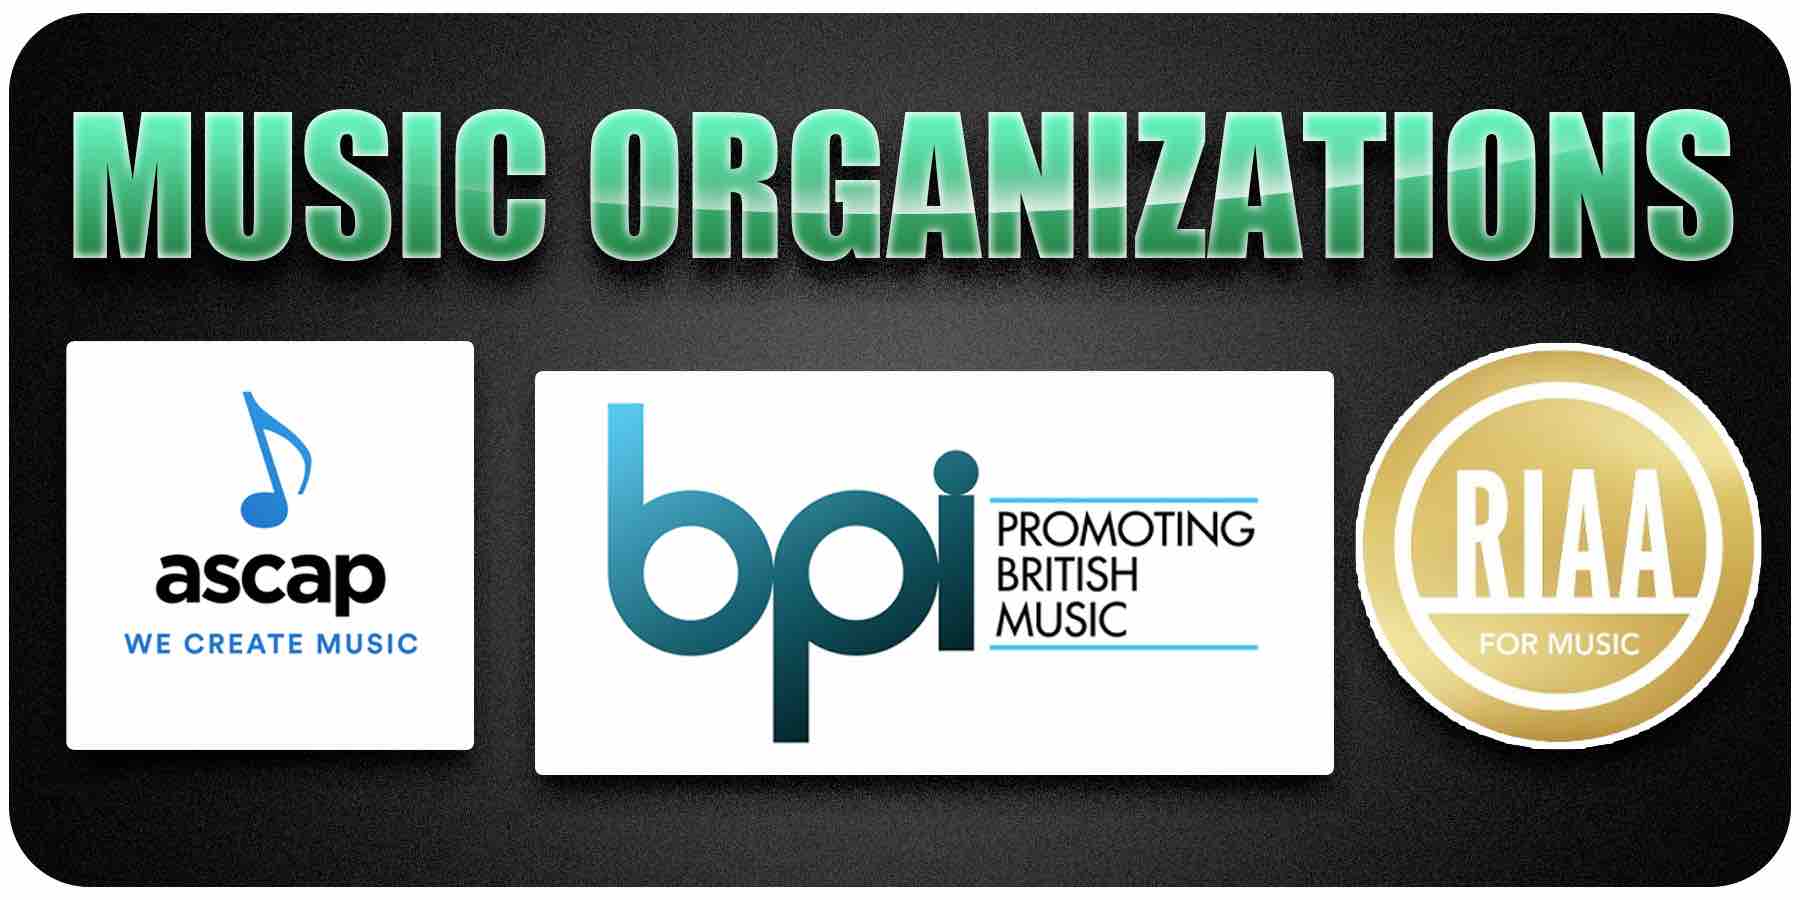 Music organizations